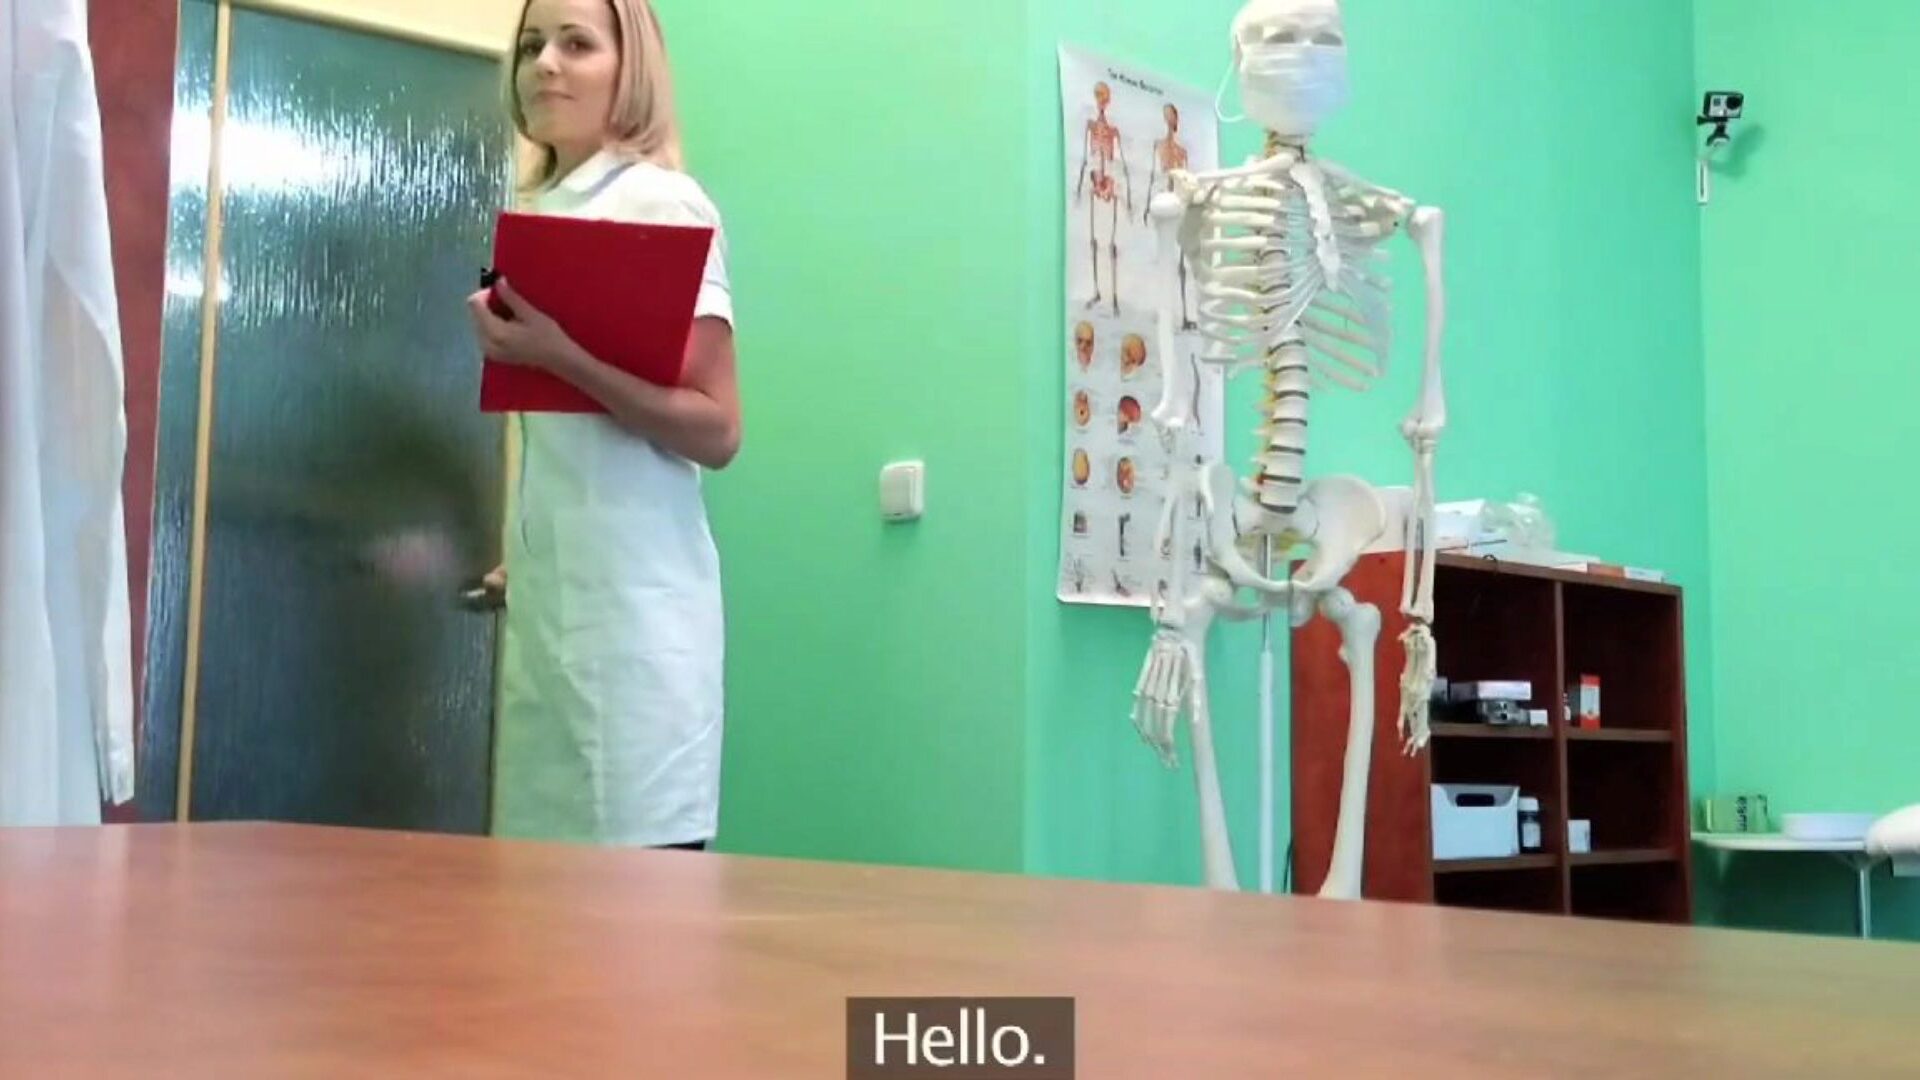 FakeHospital Naughty blonde nurse gets doctors cock